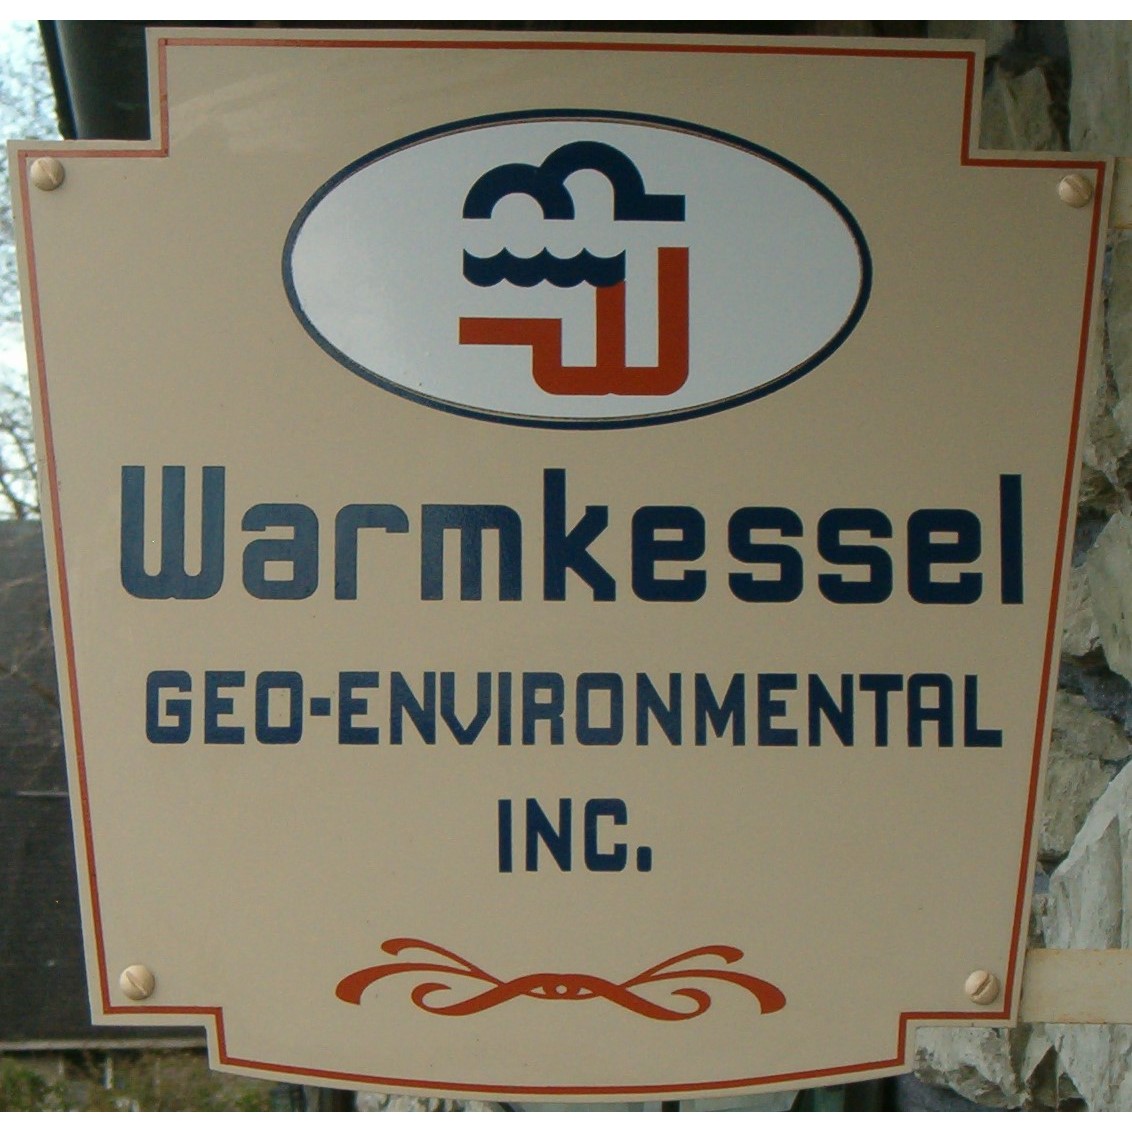 Warmkessel Geo-Environmental Inc